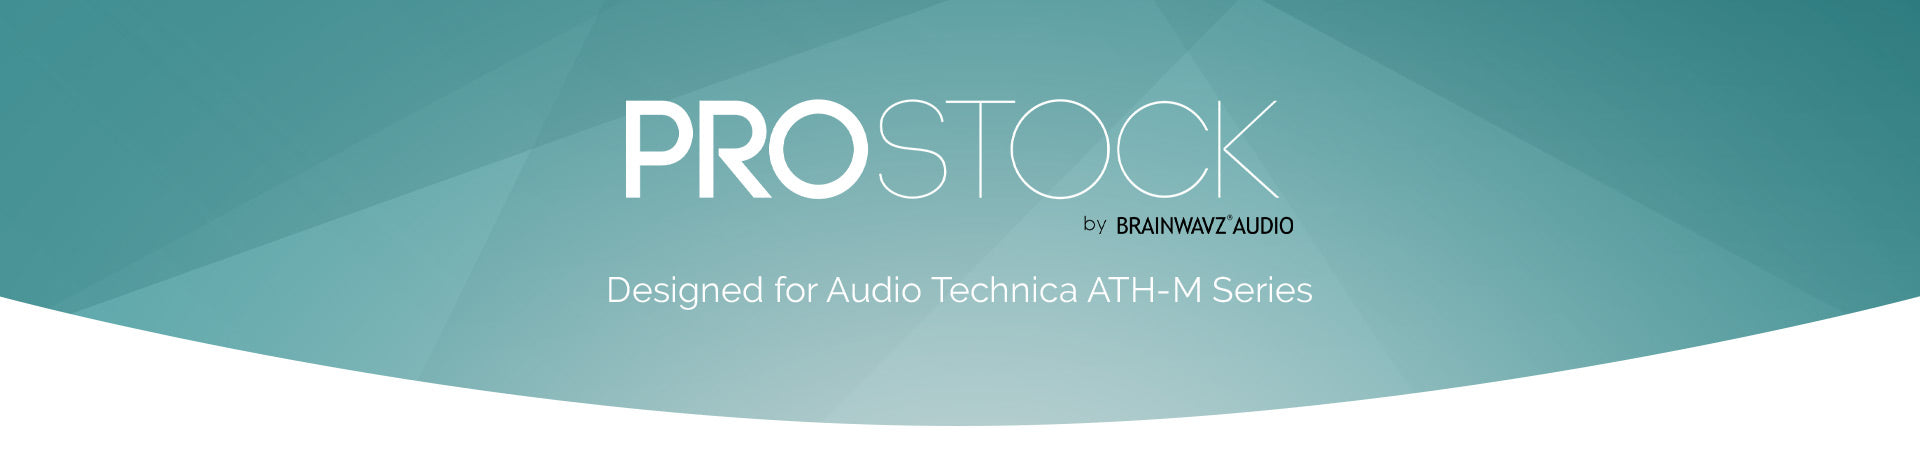 ProStock - Designed for ATH-M Series Headphones